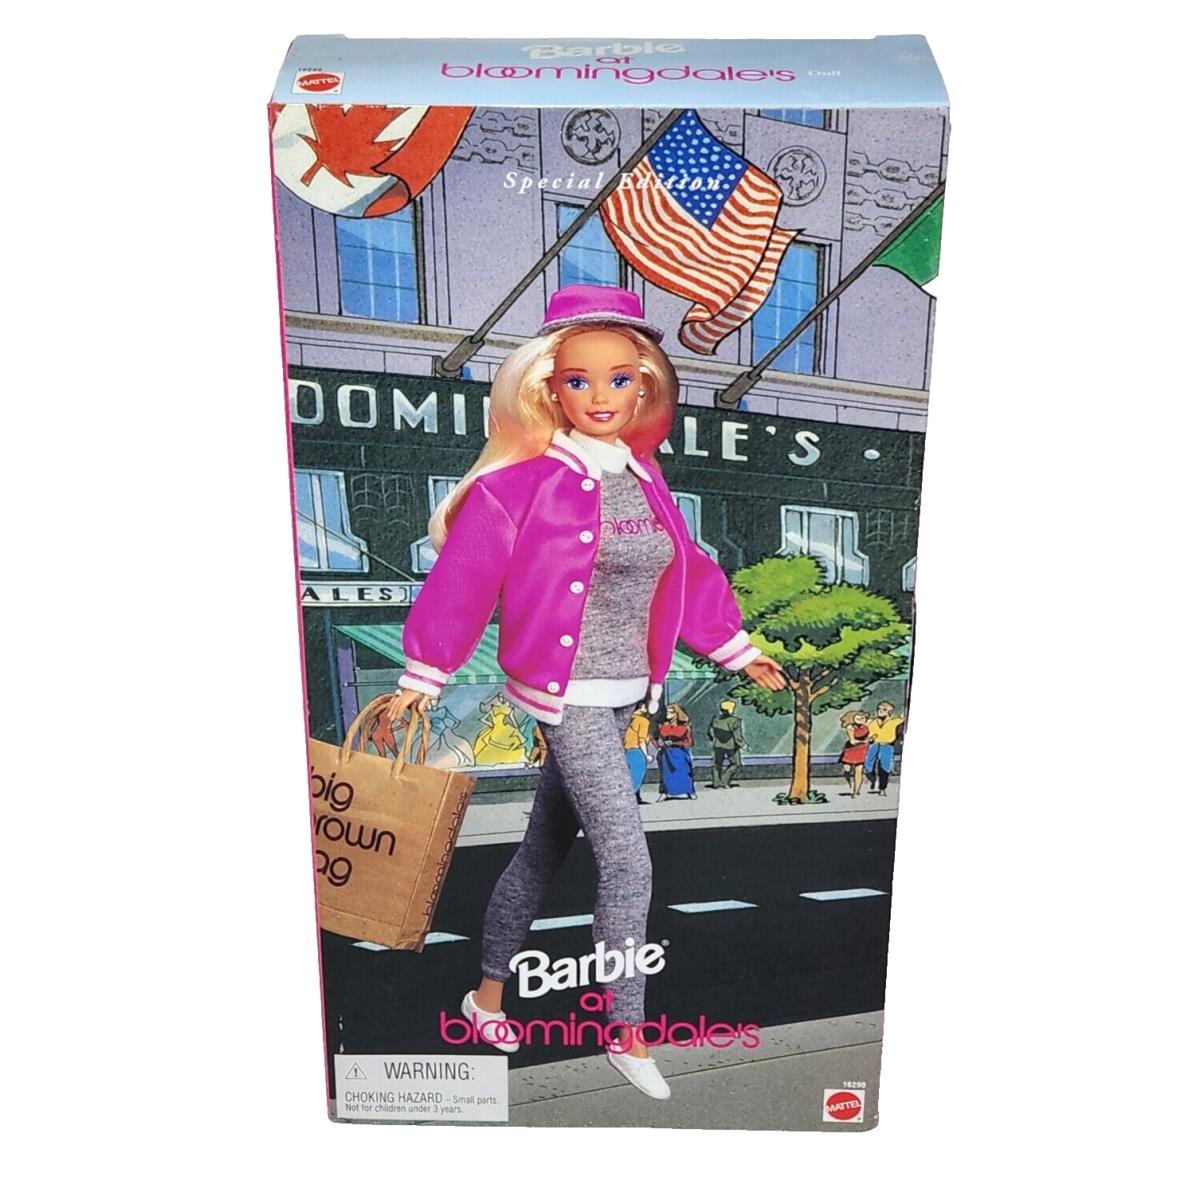 Vintage 1996 Barbie AT Bloomingdales Doll Mattel 16290 Nos Shopping